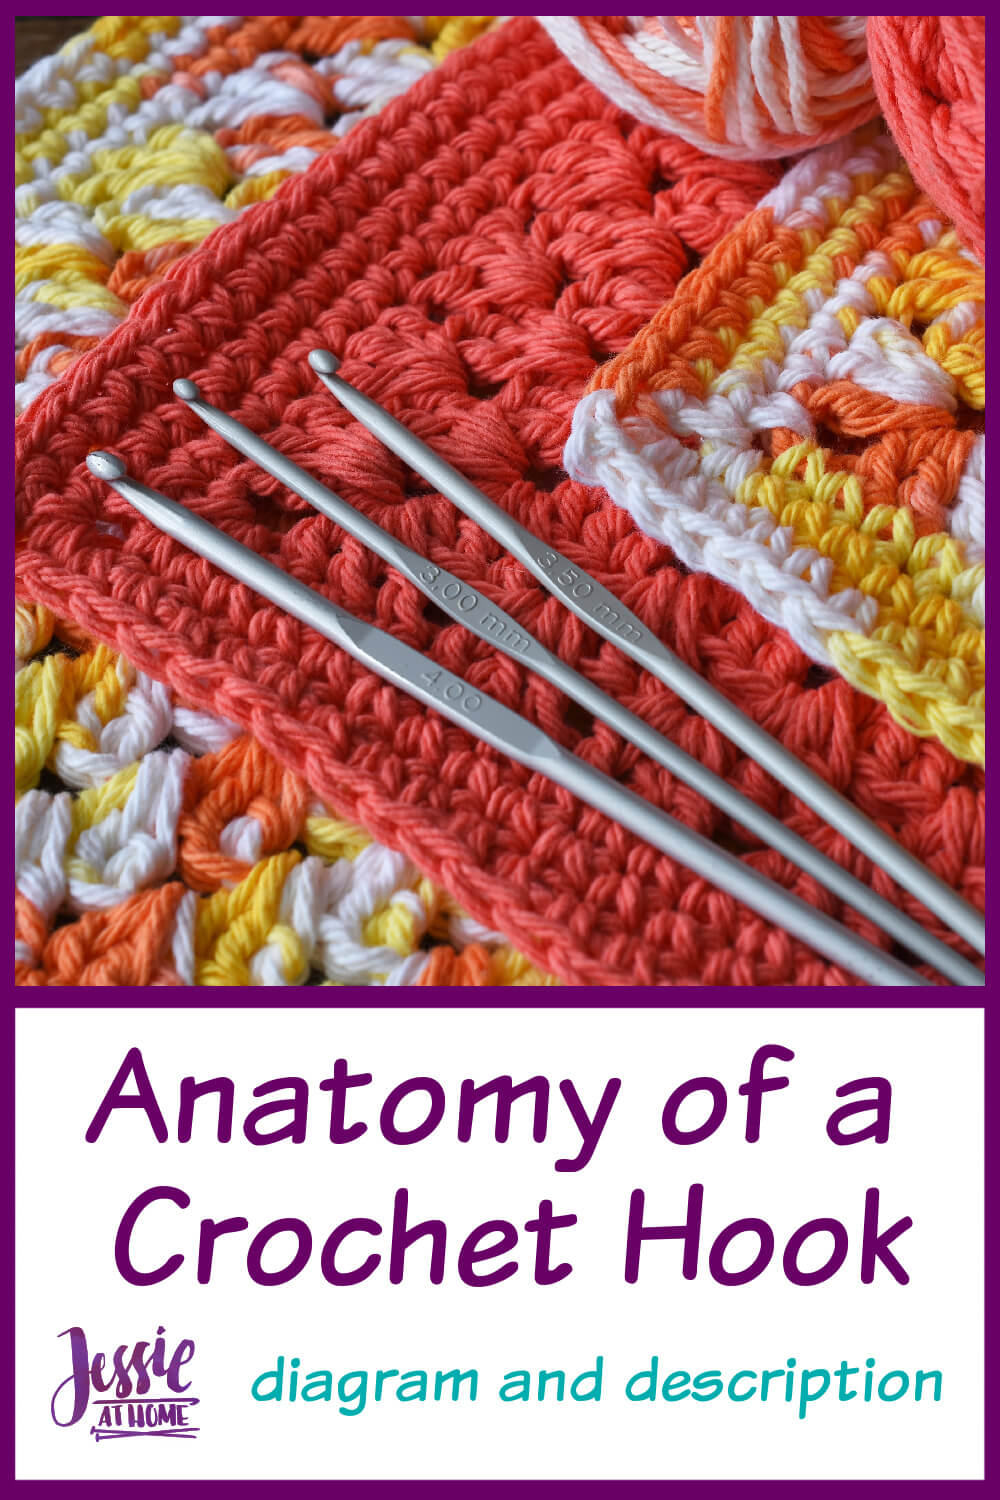 Anatomy of a Crochet Hook - diagram and description